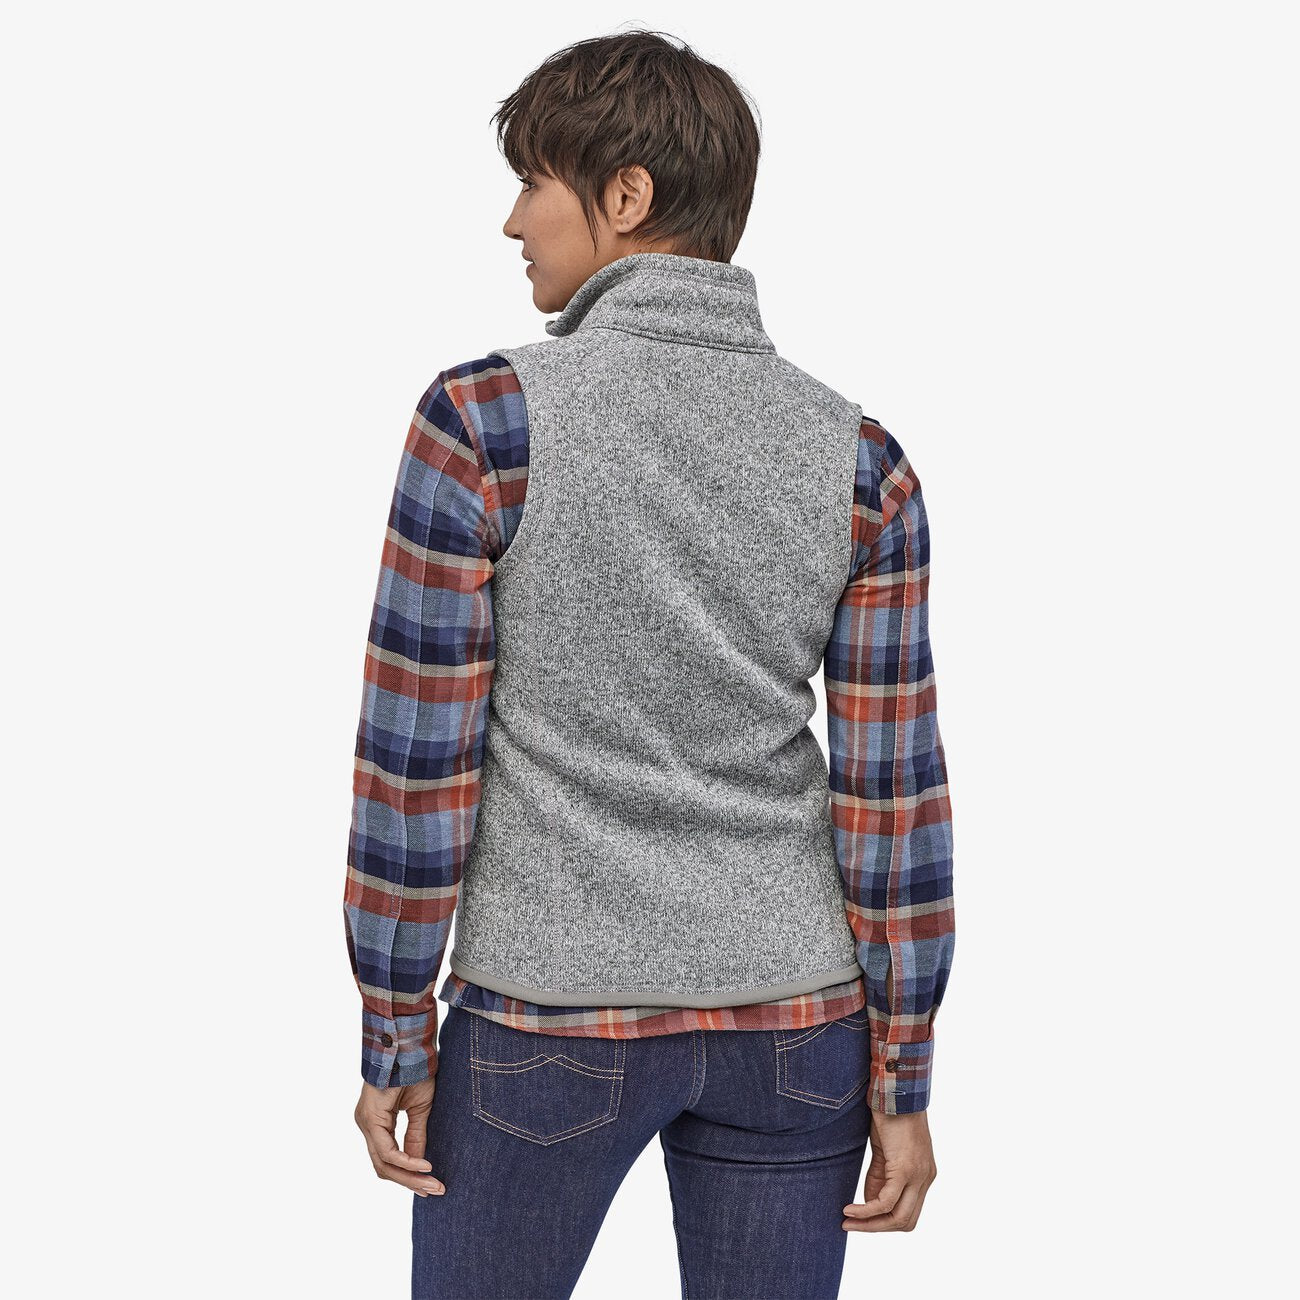 Patagonia Better Sweater Fleece Jacket - Puritan Cape Cod